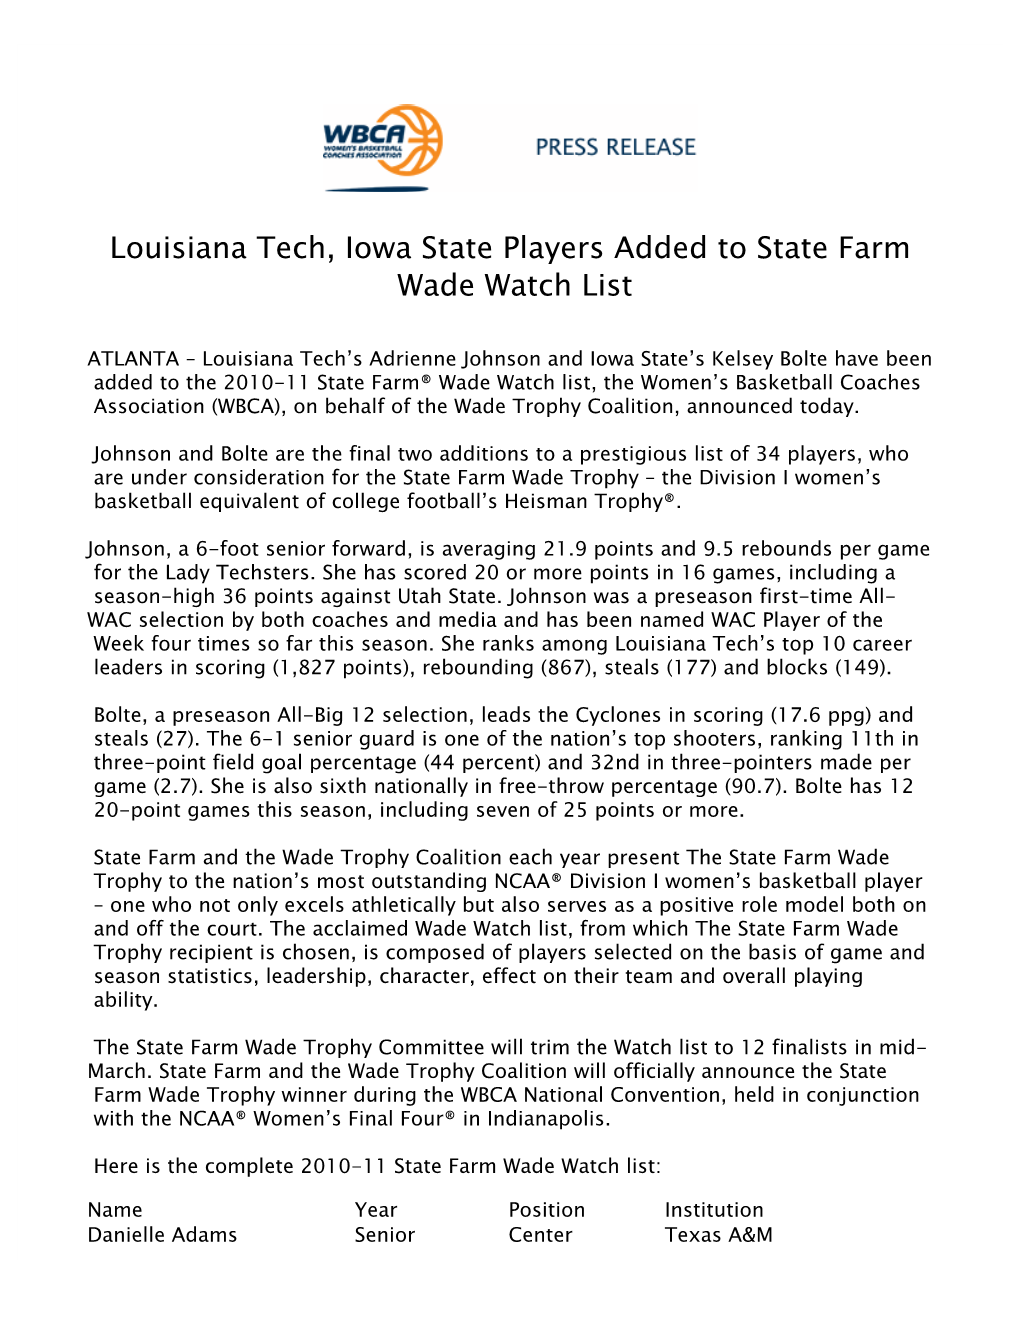 Louisiana Tech, Iowa State Players Added to State Farm Wade Watch List